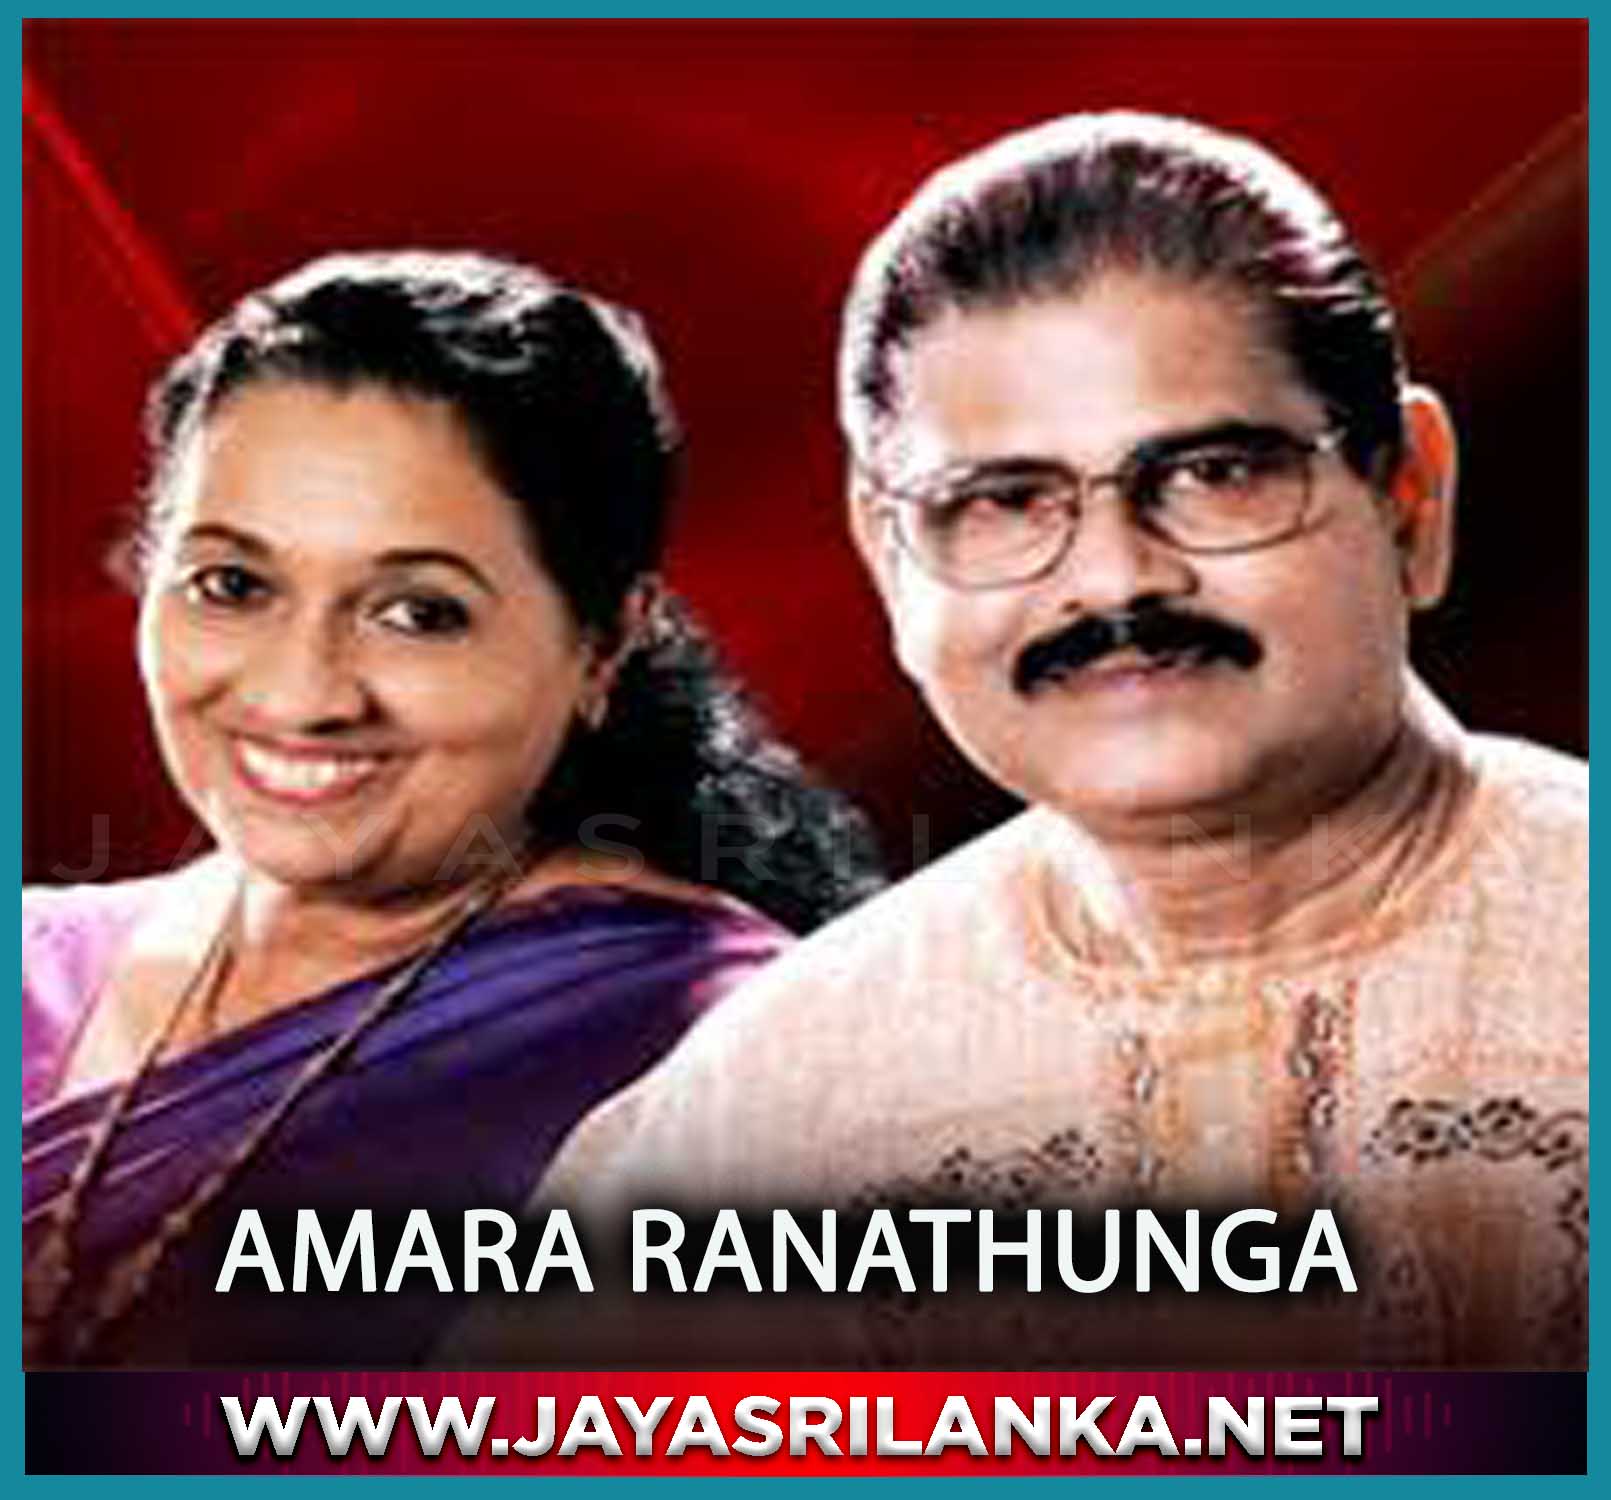 Mana Bandana Pem Kalpana - Dayarathna Ranathunga And Amara Ranathunga mp3 Image